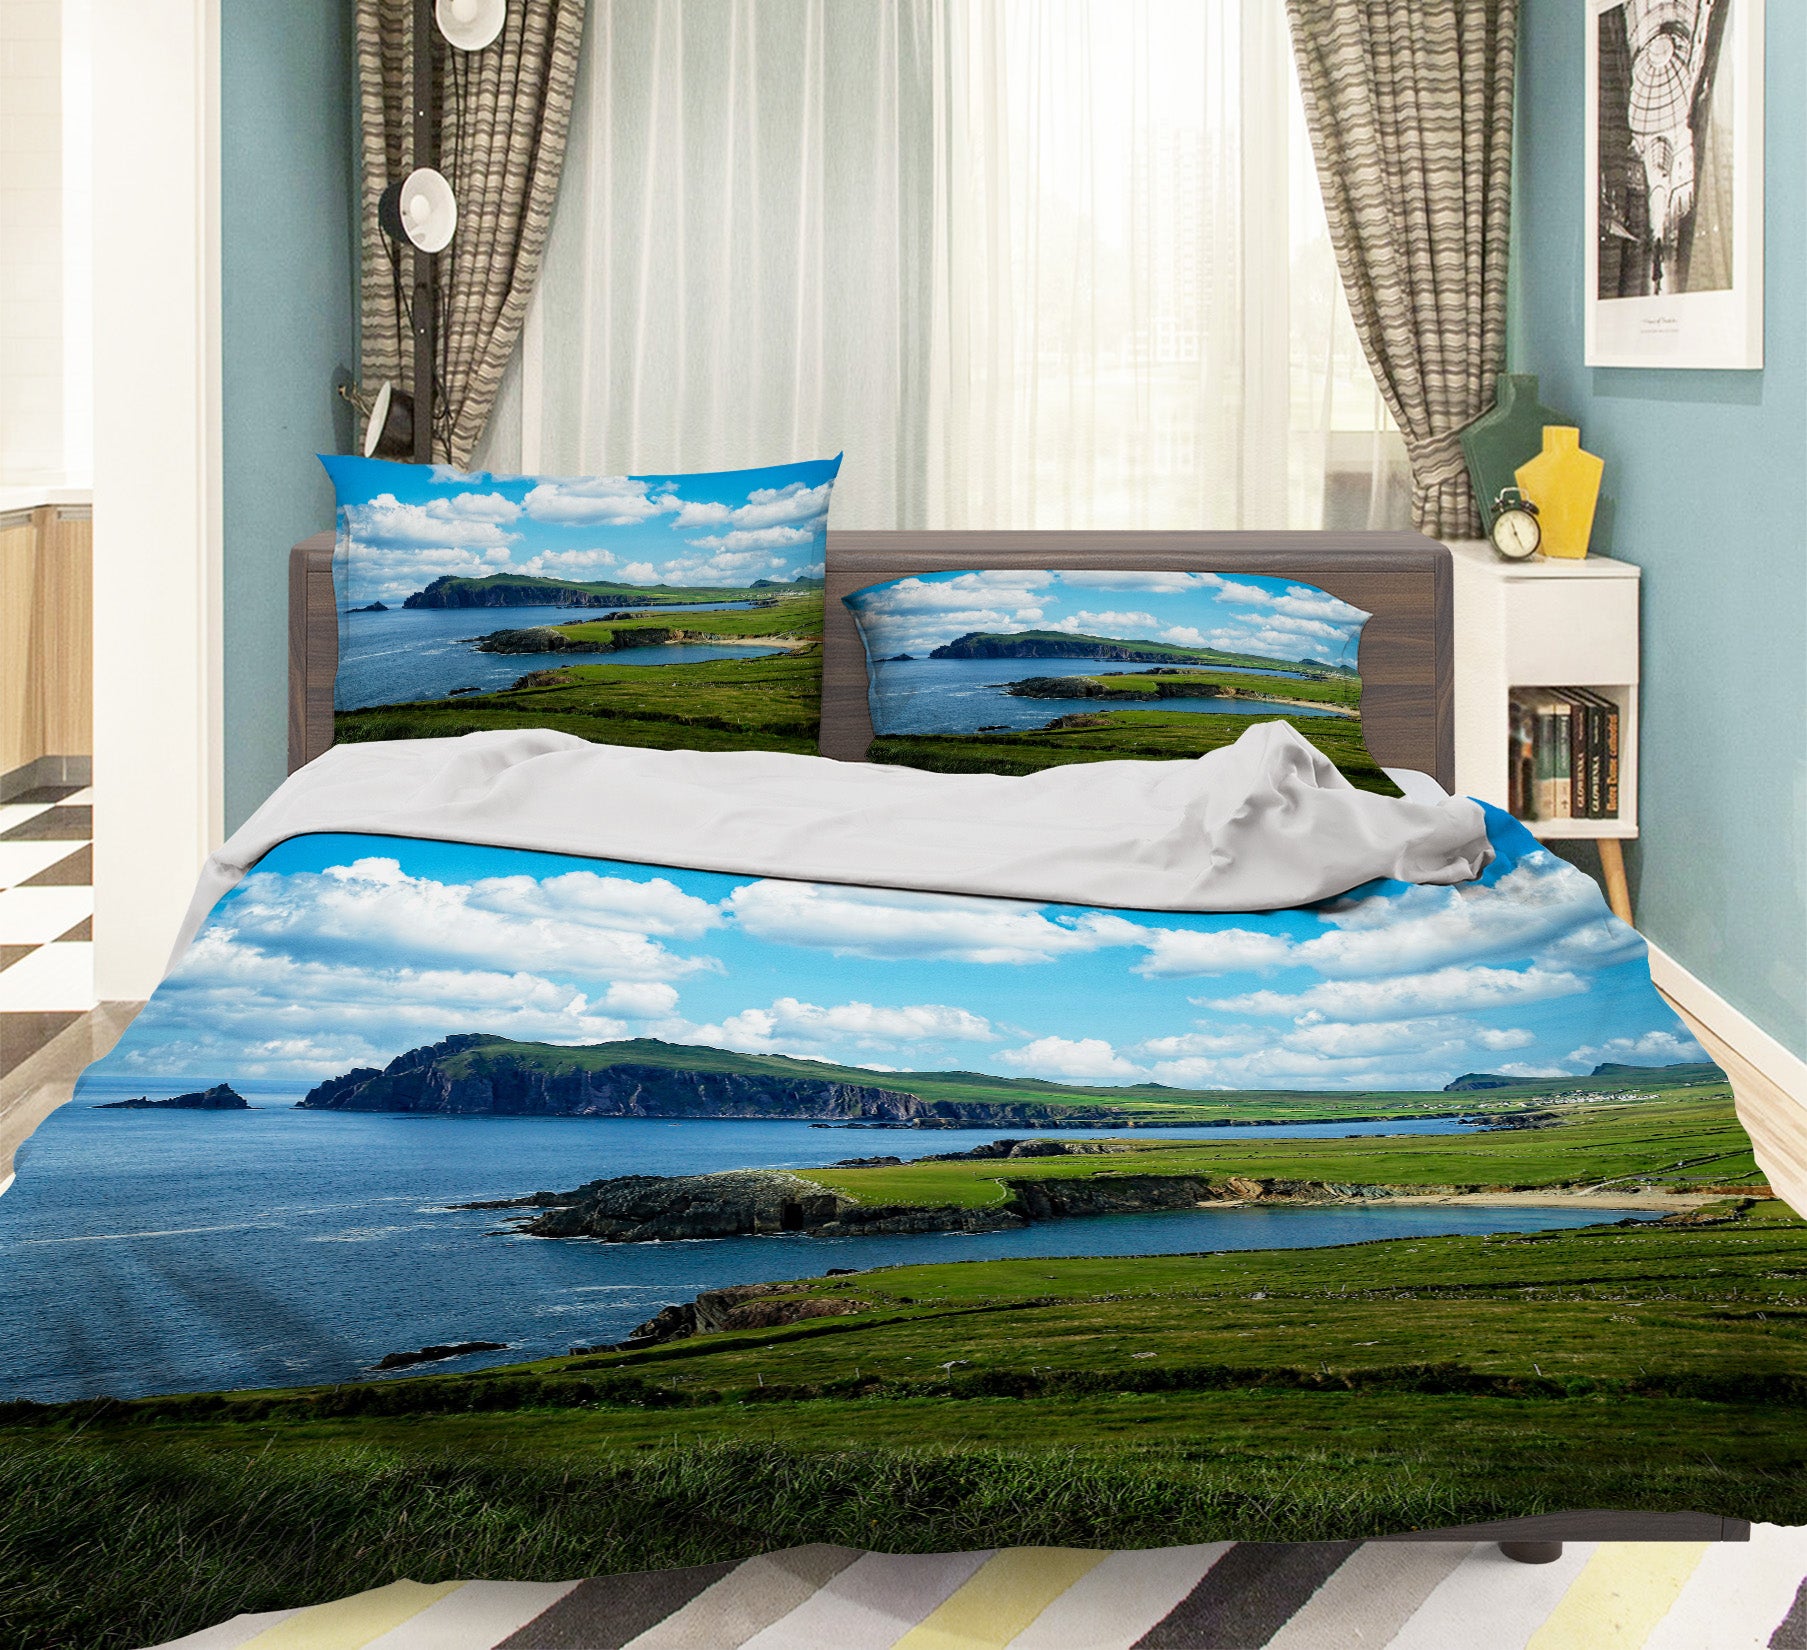 3D Ocean Lawn Rock 8690 Kathy Barefield Bedding Bed Pillowcases Quilt